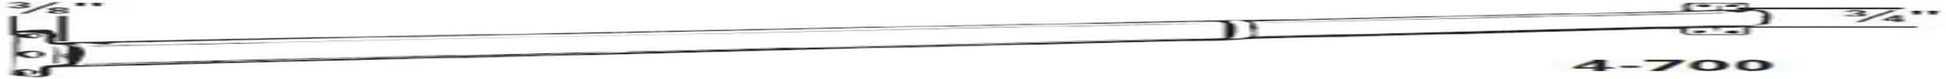 Graber Flat Lock-Seam Sash Rod (11 to 20-Inch Adjustable Width, White)